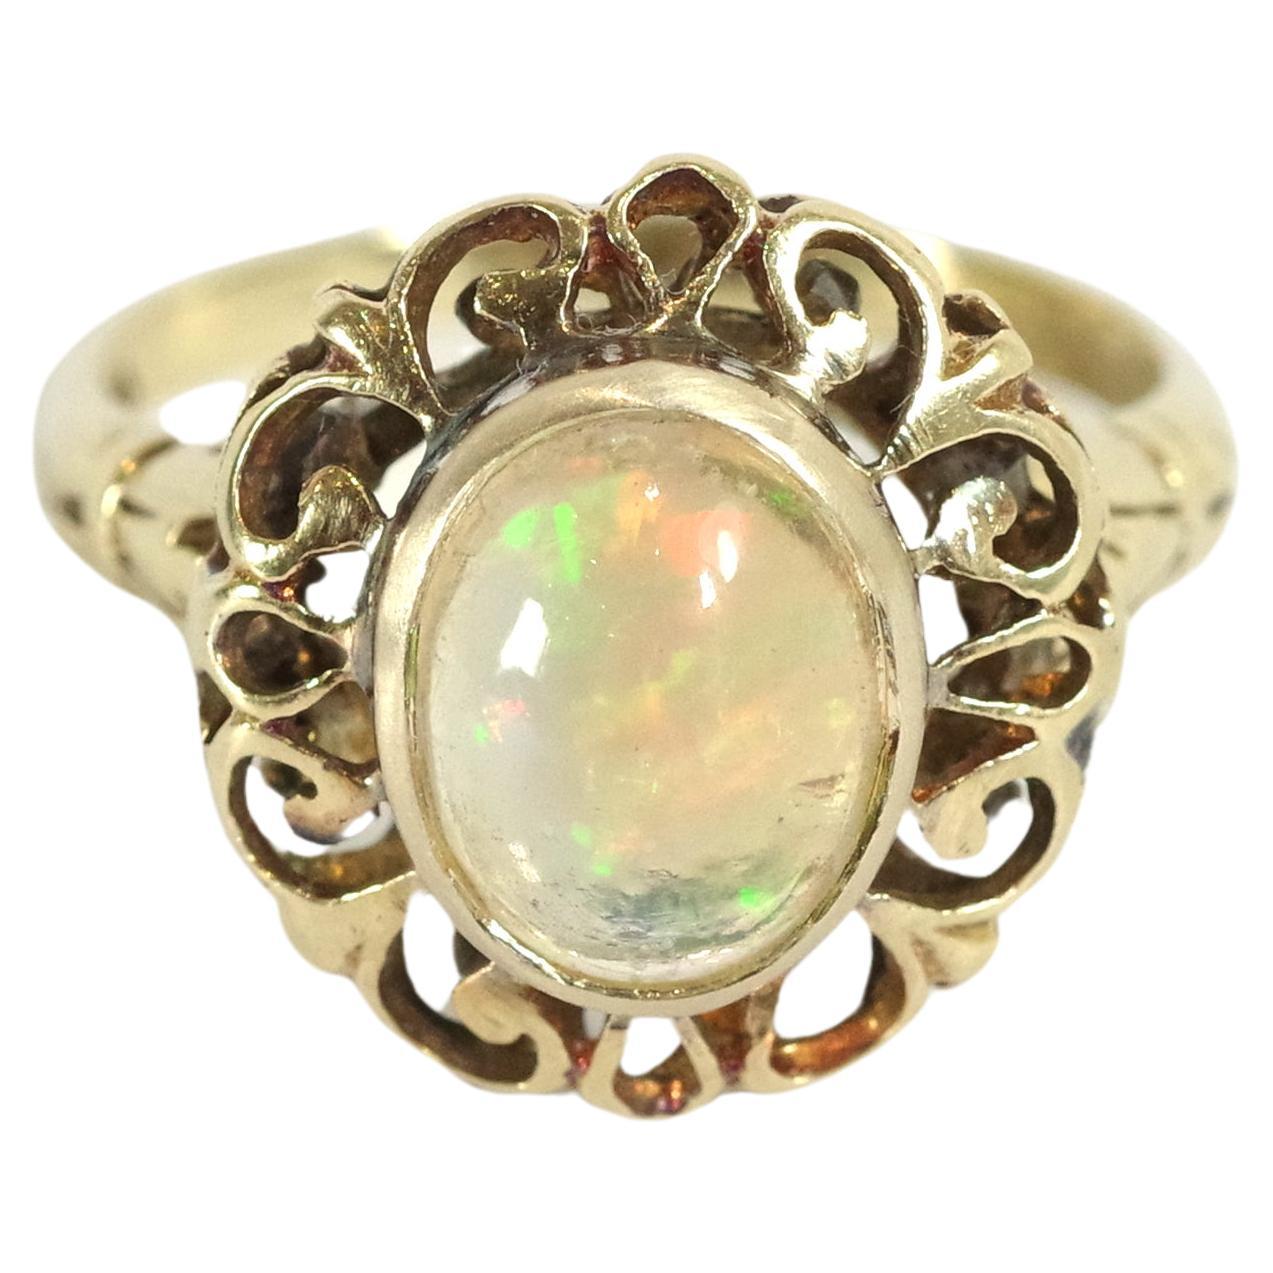 Retro opal ring in 14 karat rose gold, cabochon cut opal